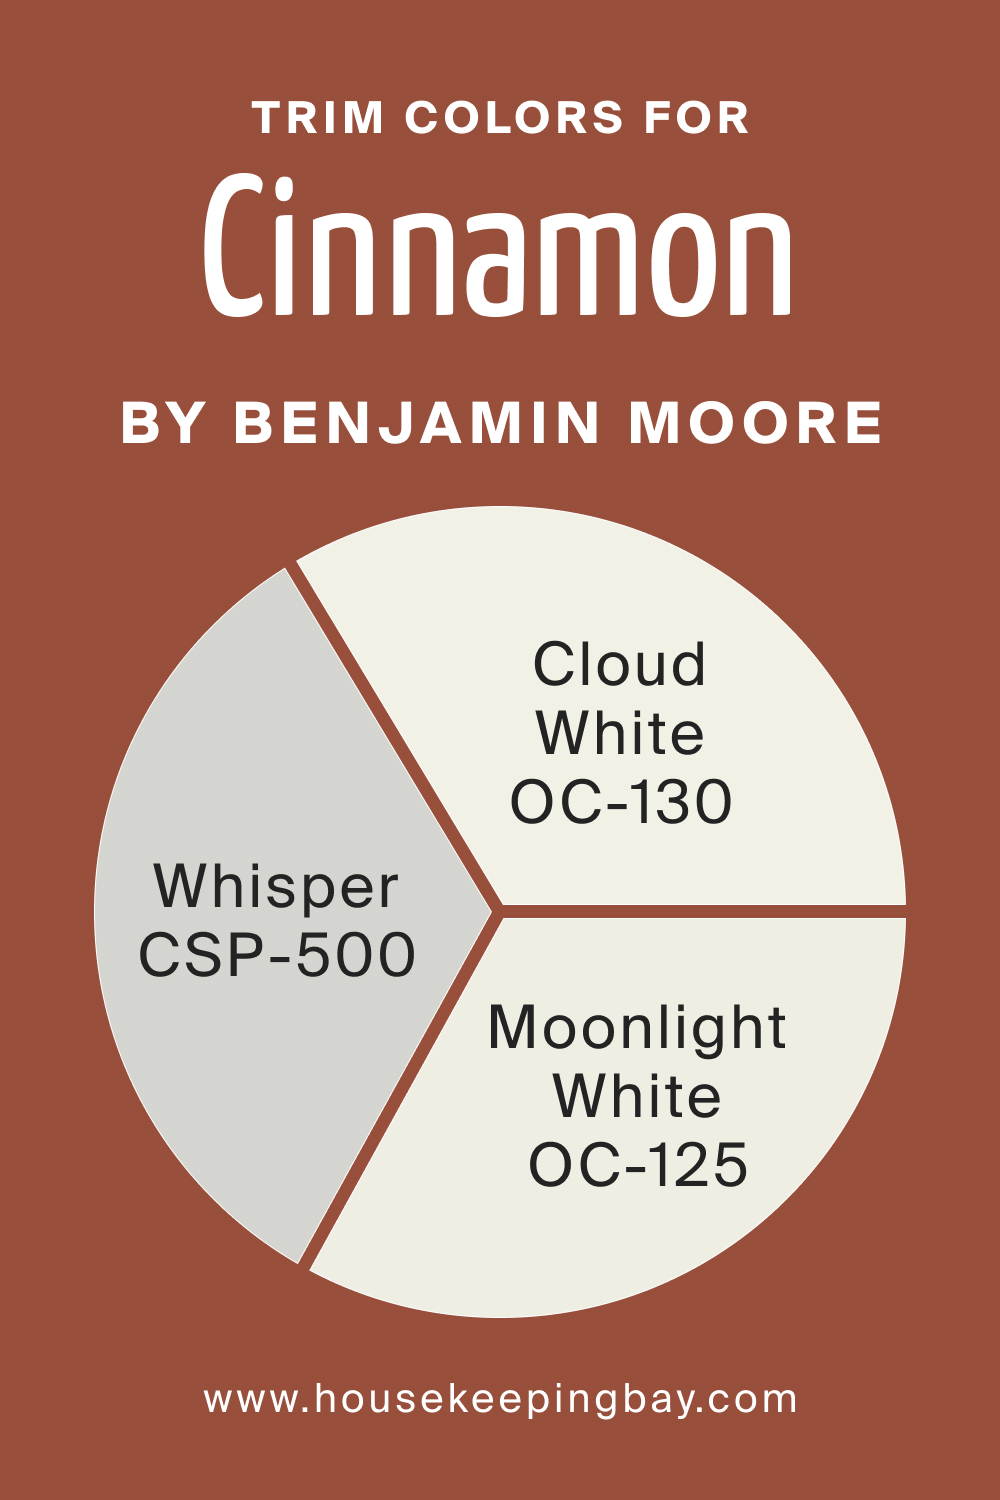 Trim Colors for Cinnamon 2174 20 by Benjamin Moore, www. Housekeepingbay.com